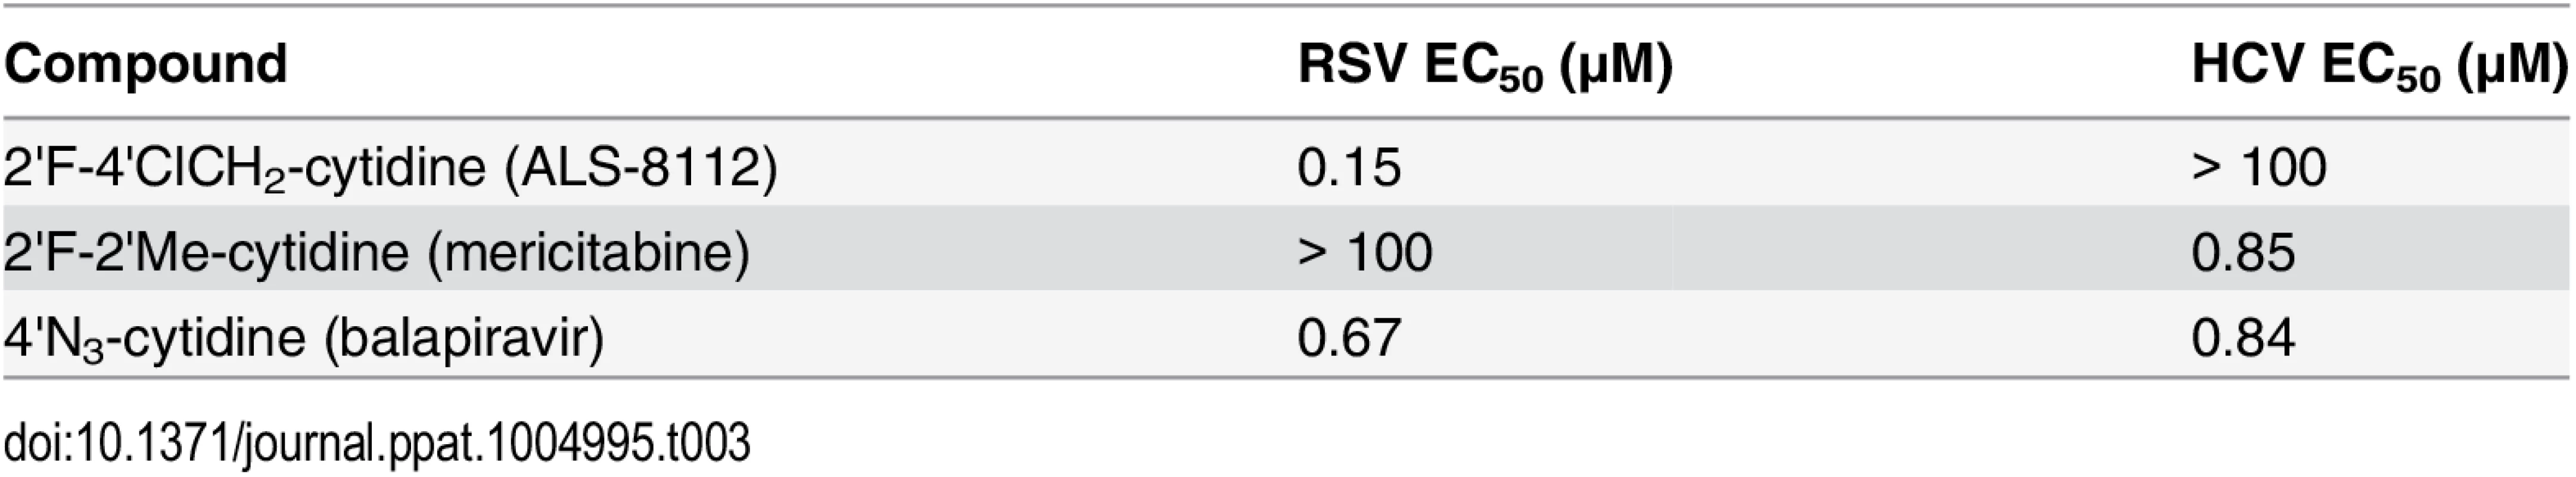 Inhibition potency of cytidine analogs against RSV versus HCV replicon.